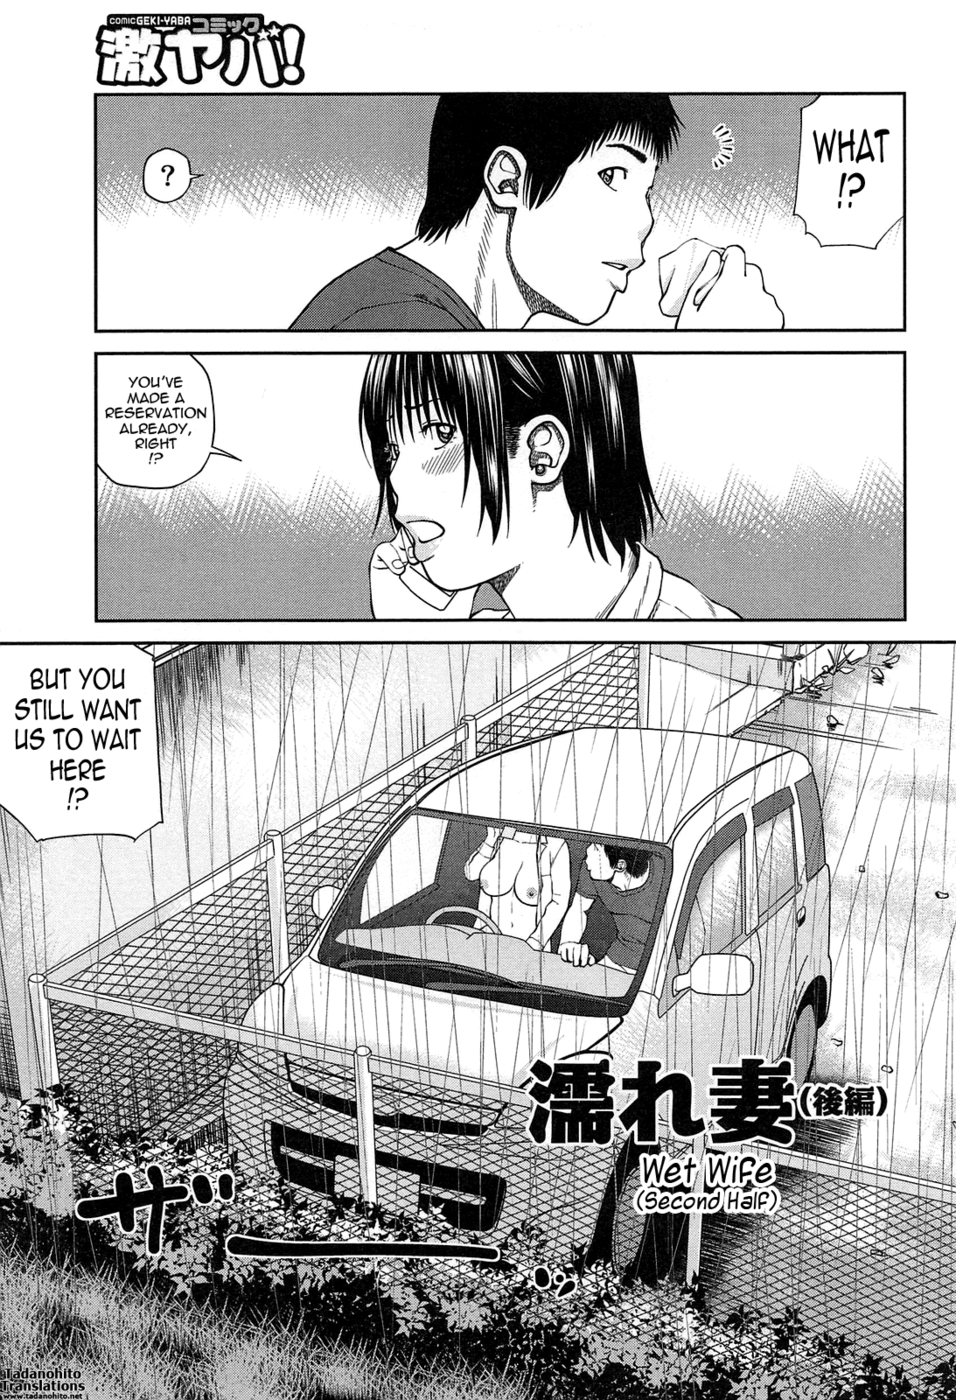 Hentai Manga Comic-35 Year Old Ripe Wife-Chapter 2-Wet Wife (Second Half)-1